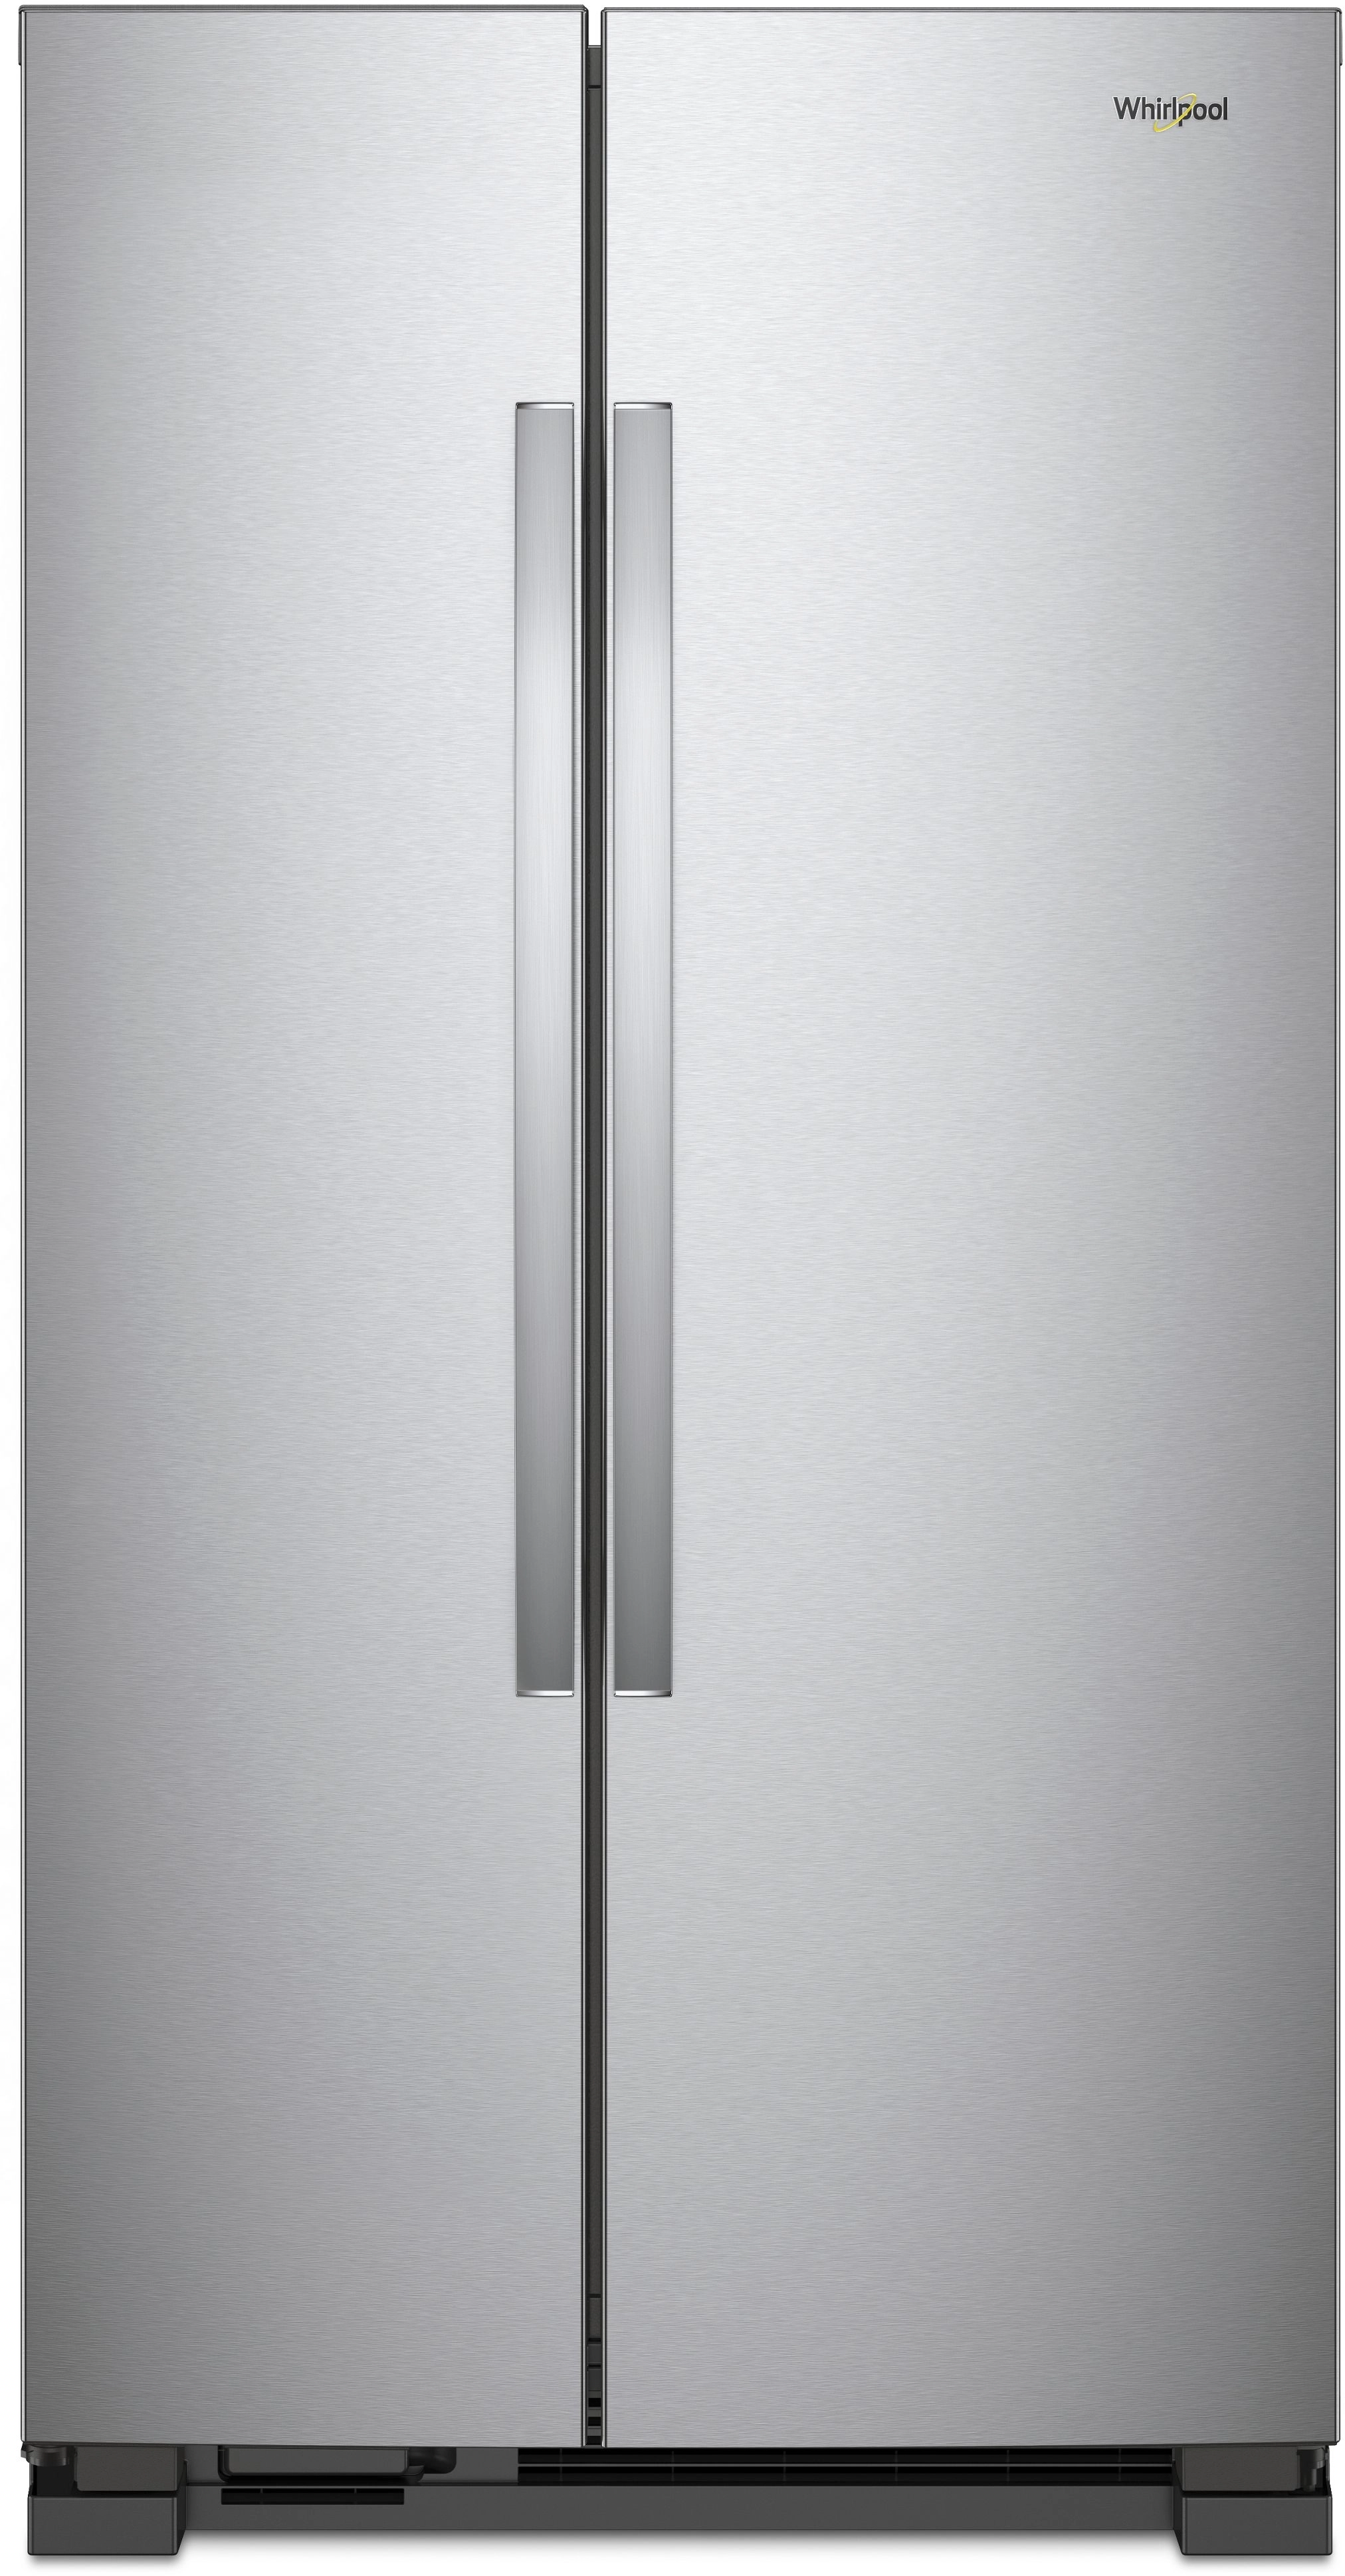 Whirlpool 33 Inch, 22 Cu.Ft. Freestanding Side-by-Side Refrigerator